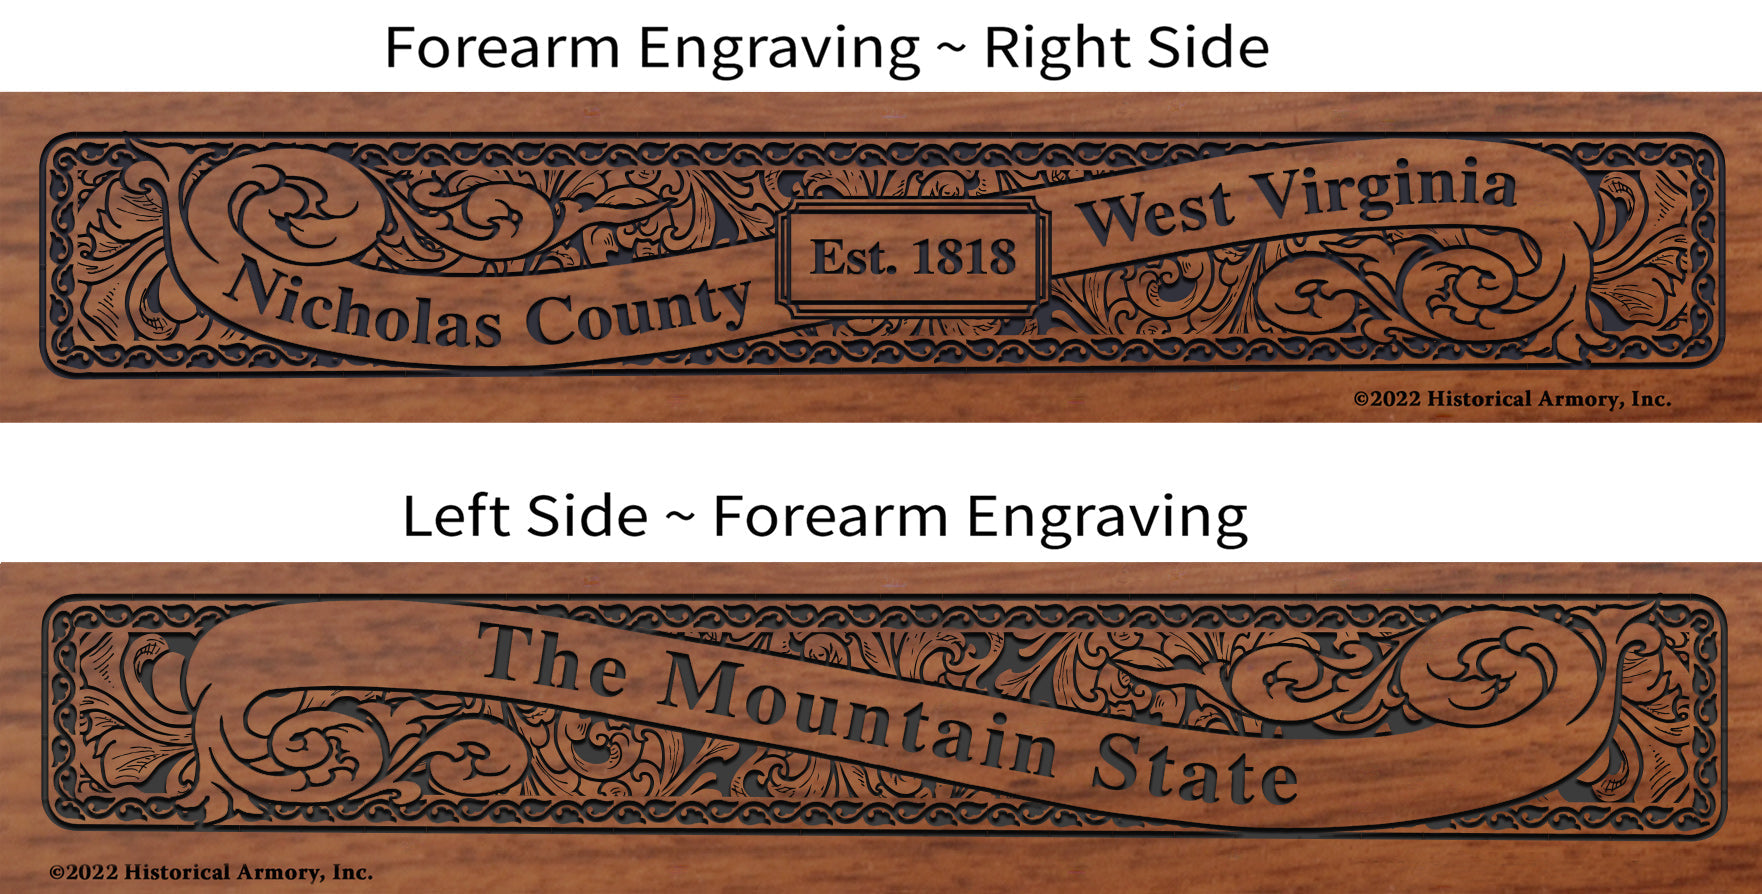 Nicholas County West Virginia Engraved Rifle Forearm